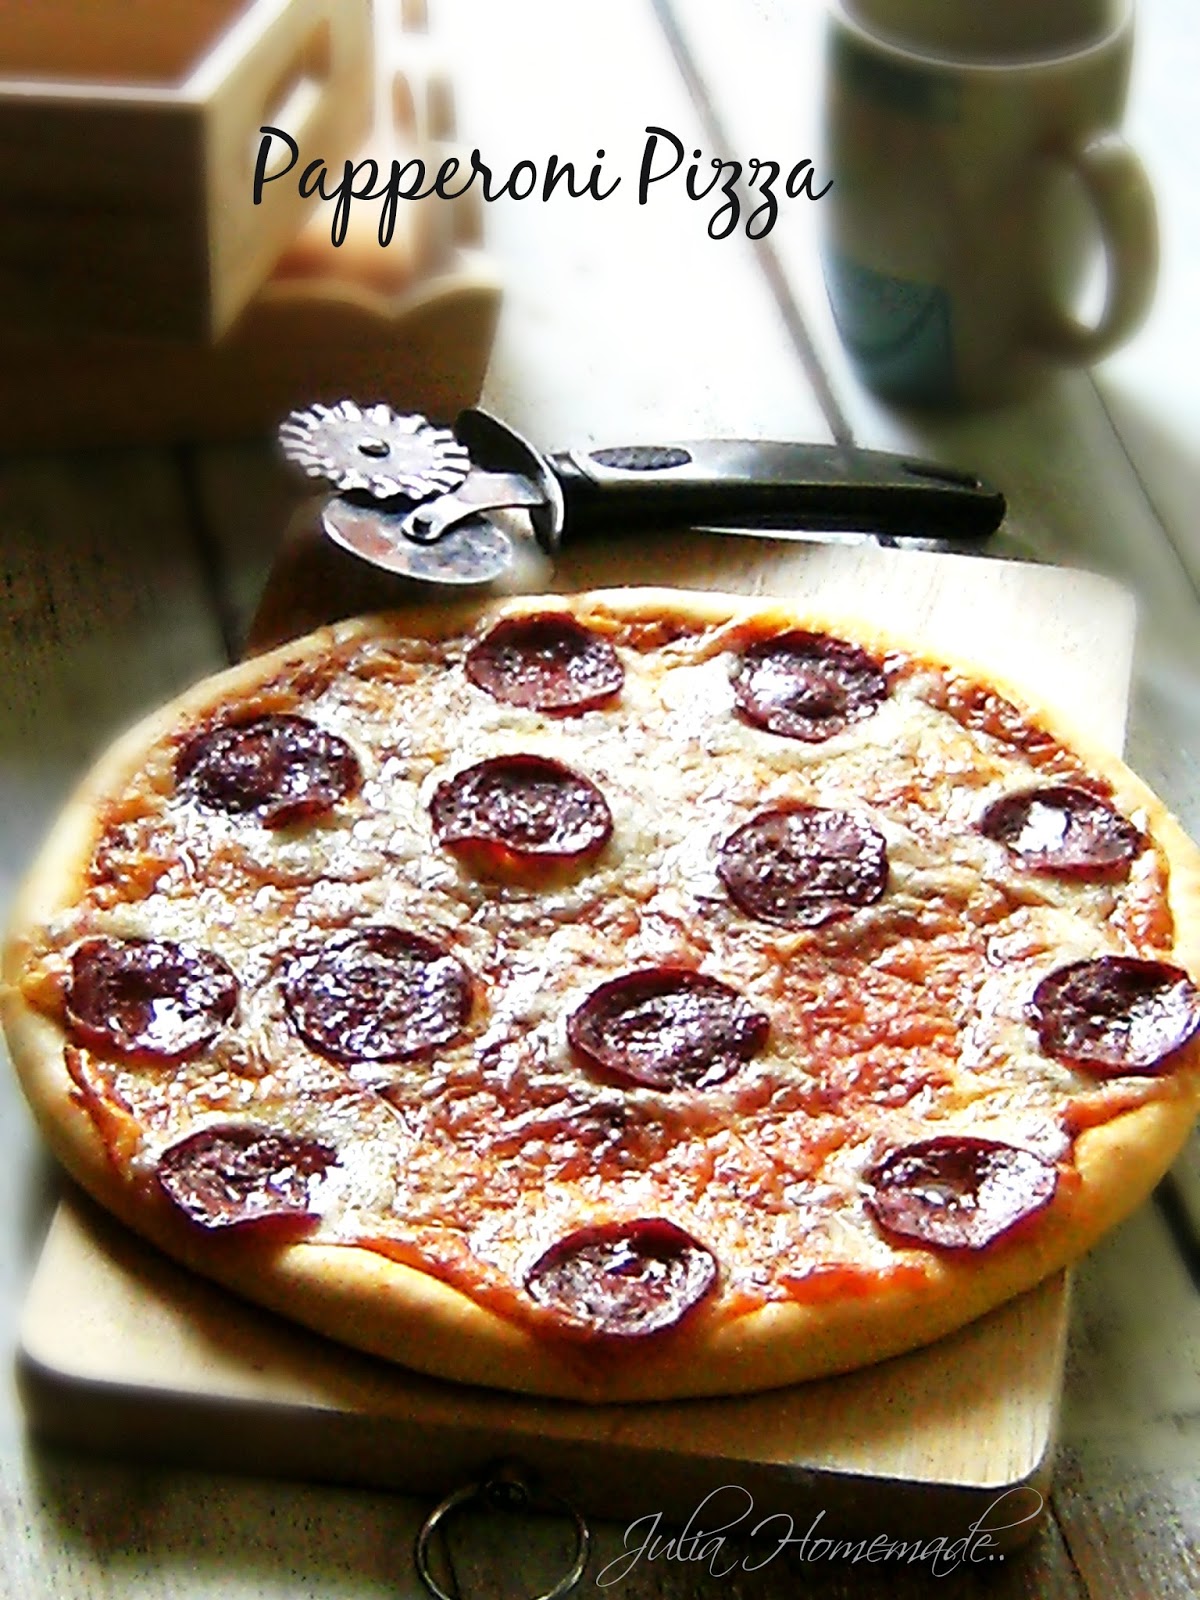 Julia Homemade: Homemade Papperoni Pizza